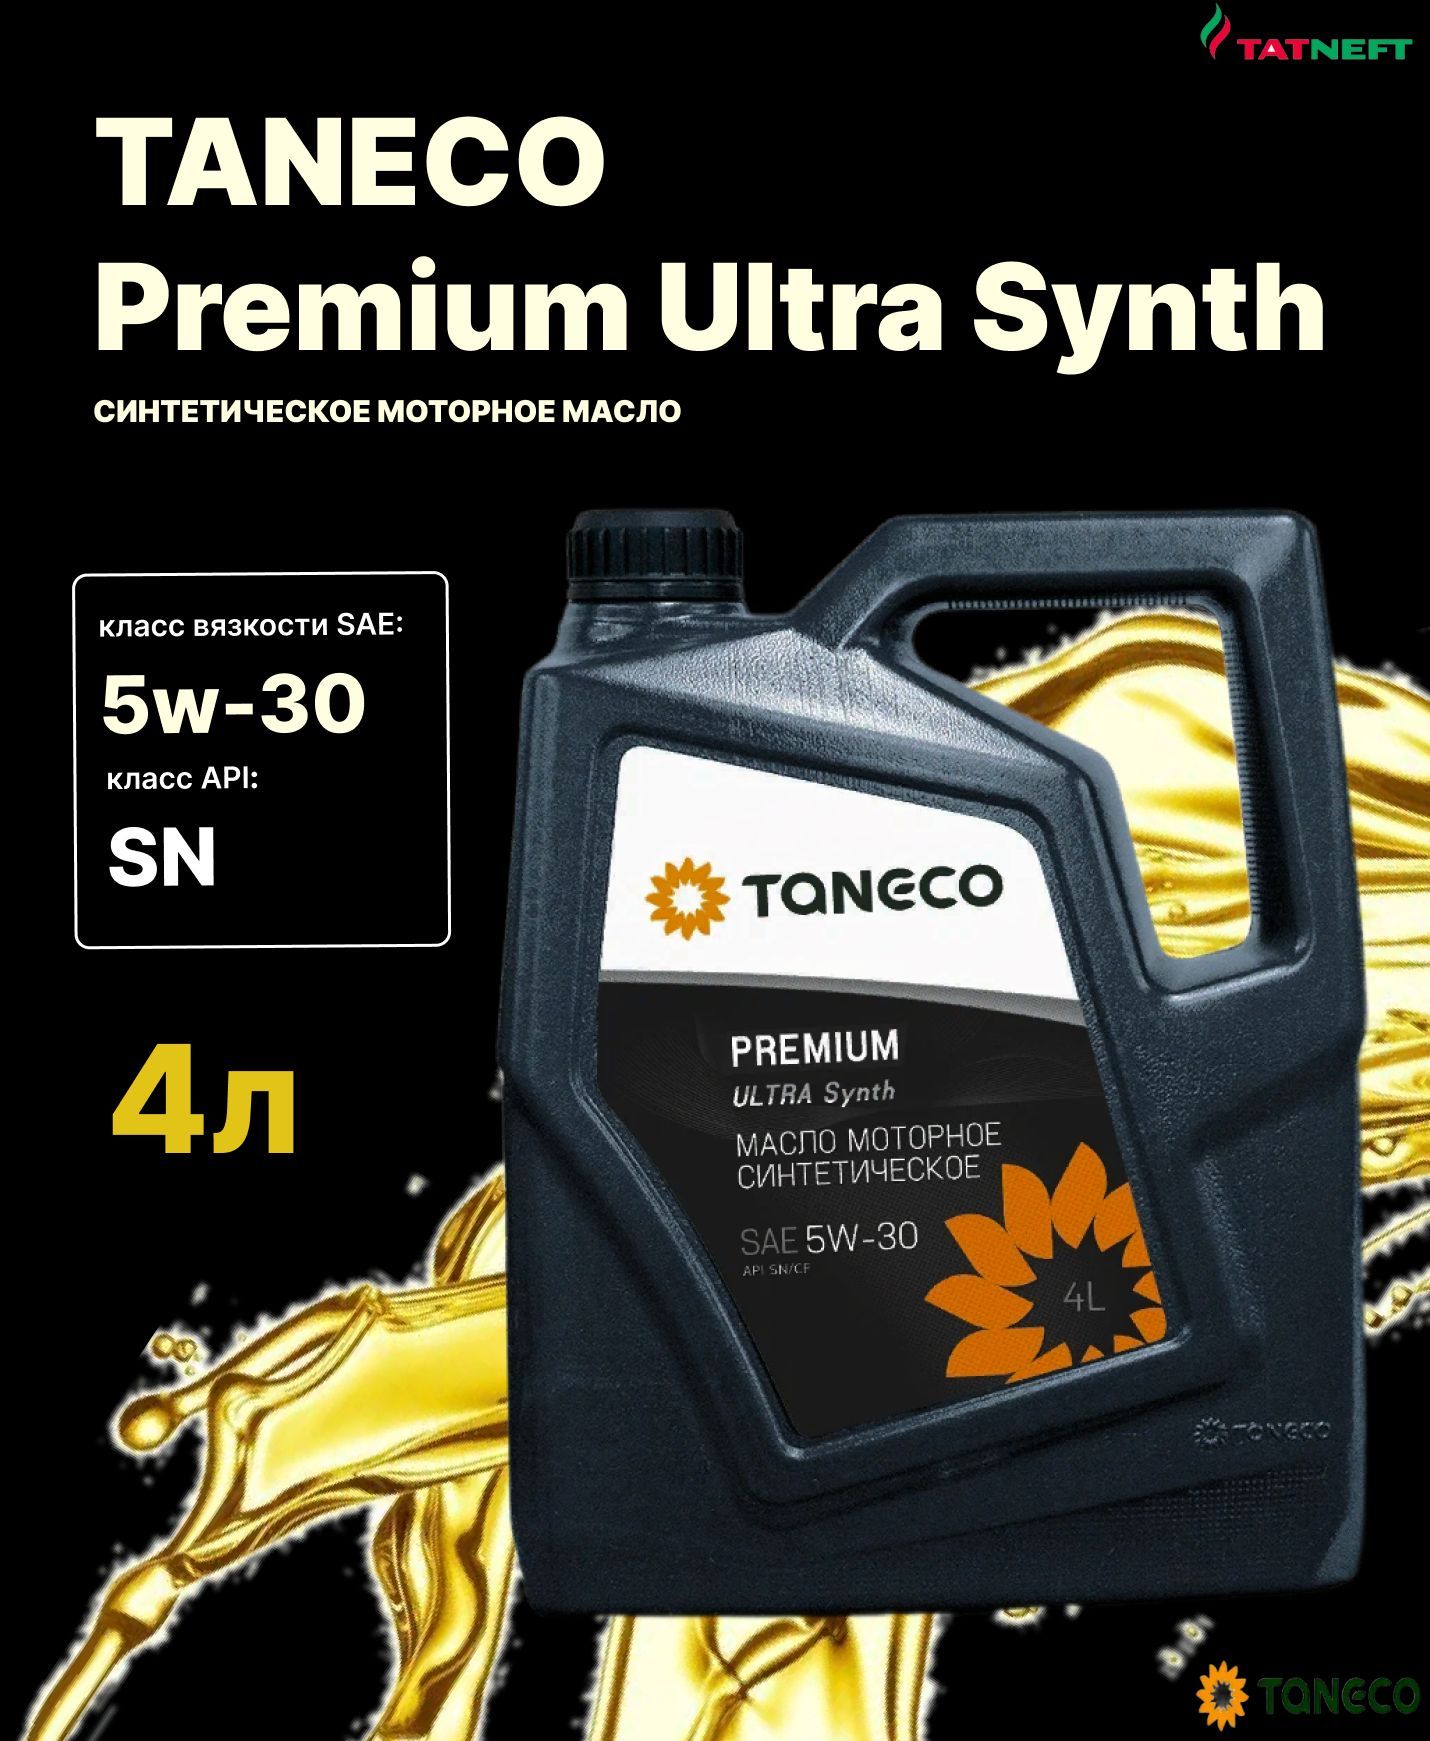 Масло taneco premium ultra synth. Taneco 5w30 Premium Ultra. ТАНЕКО премиум ультра синт 5w30. ТАНЕКО премиум ультра синт 5w30 отзывы. Масло моторное fam Ultra Sint 5w30.